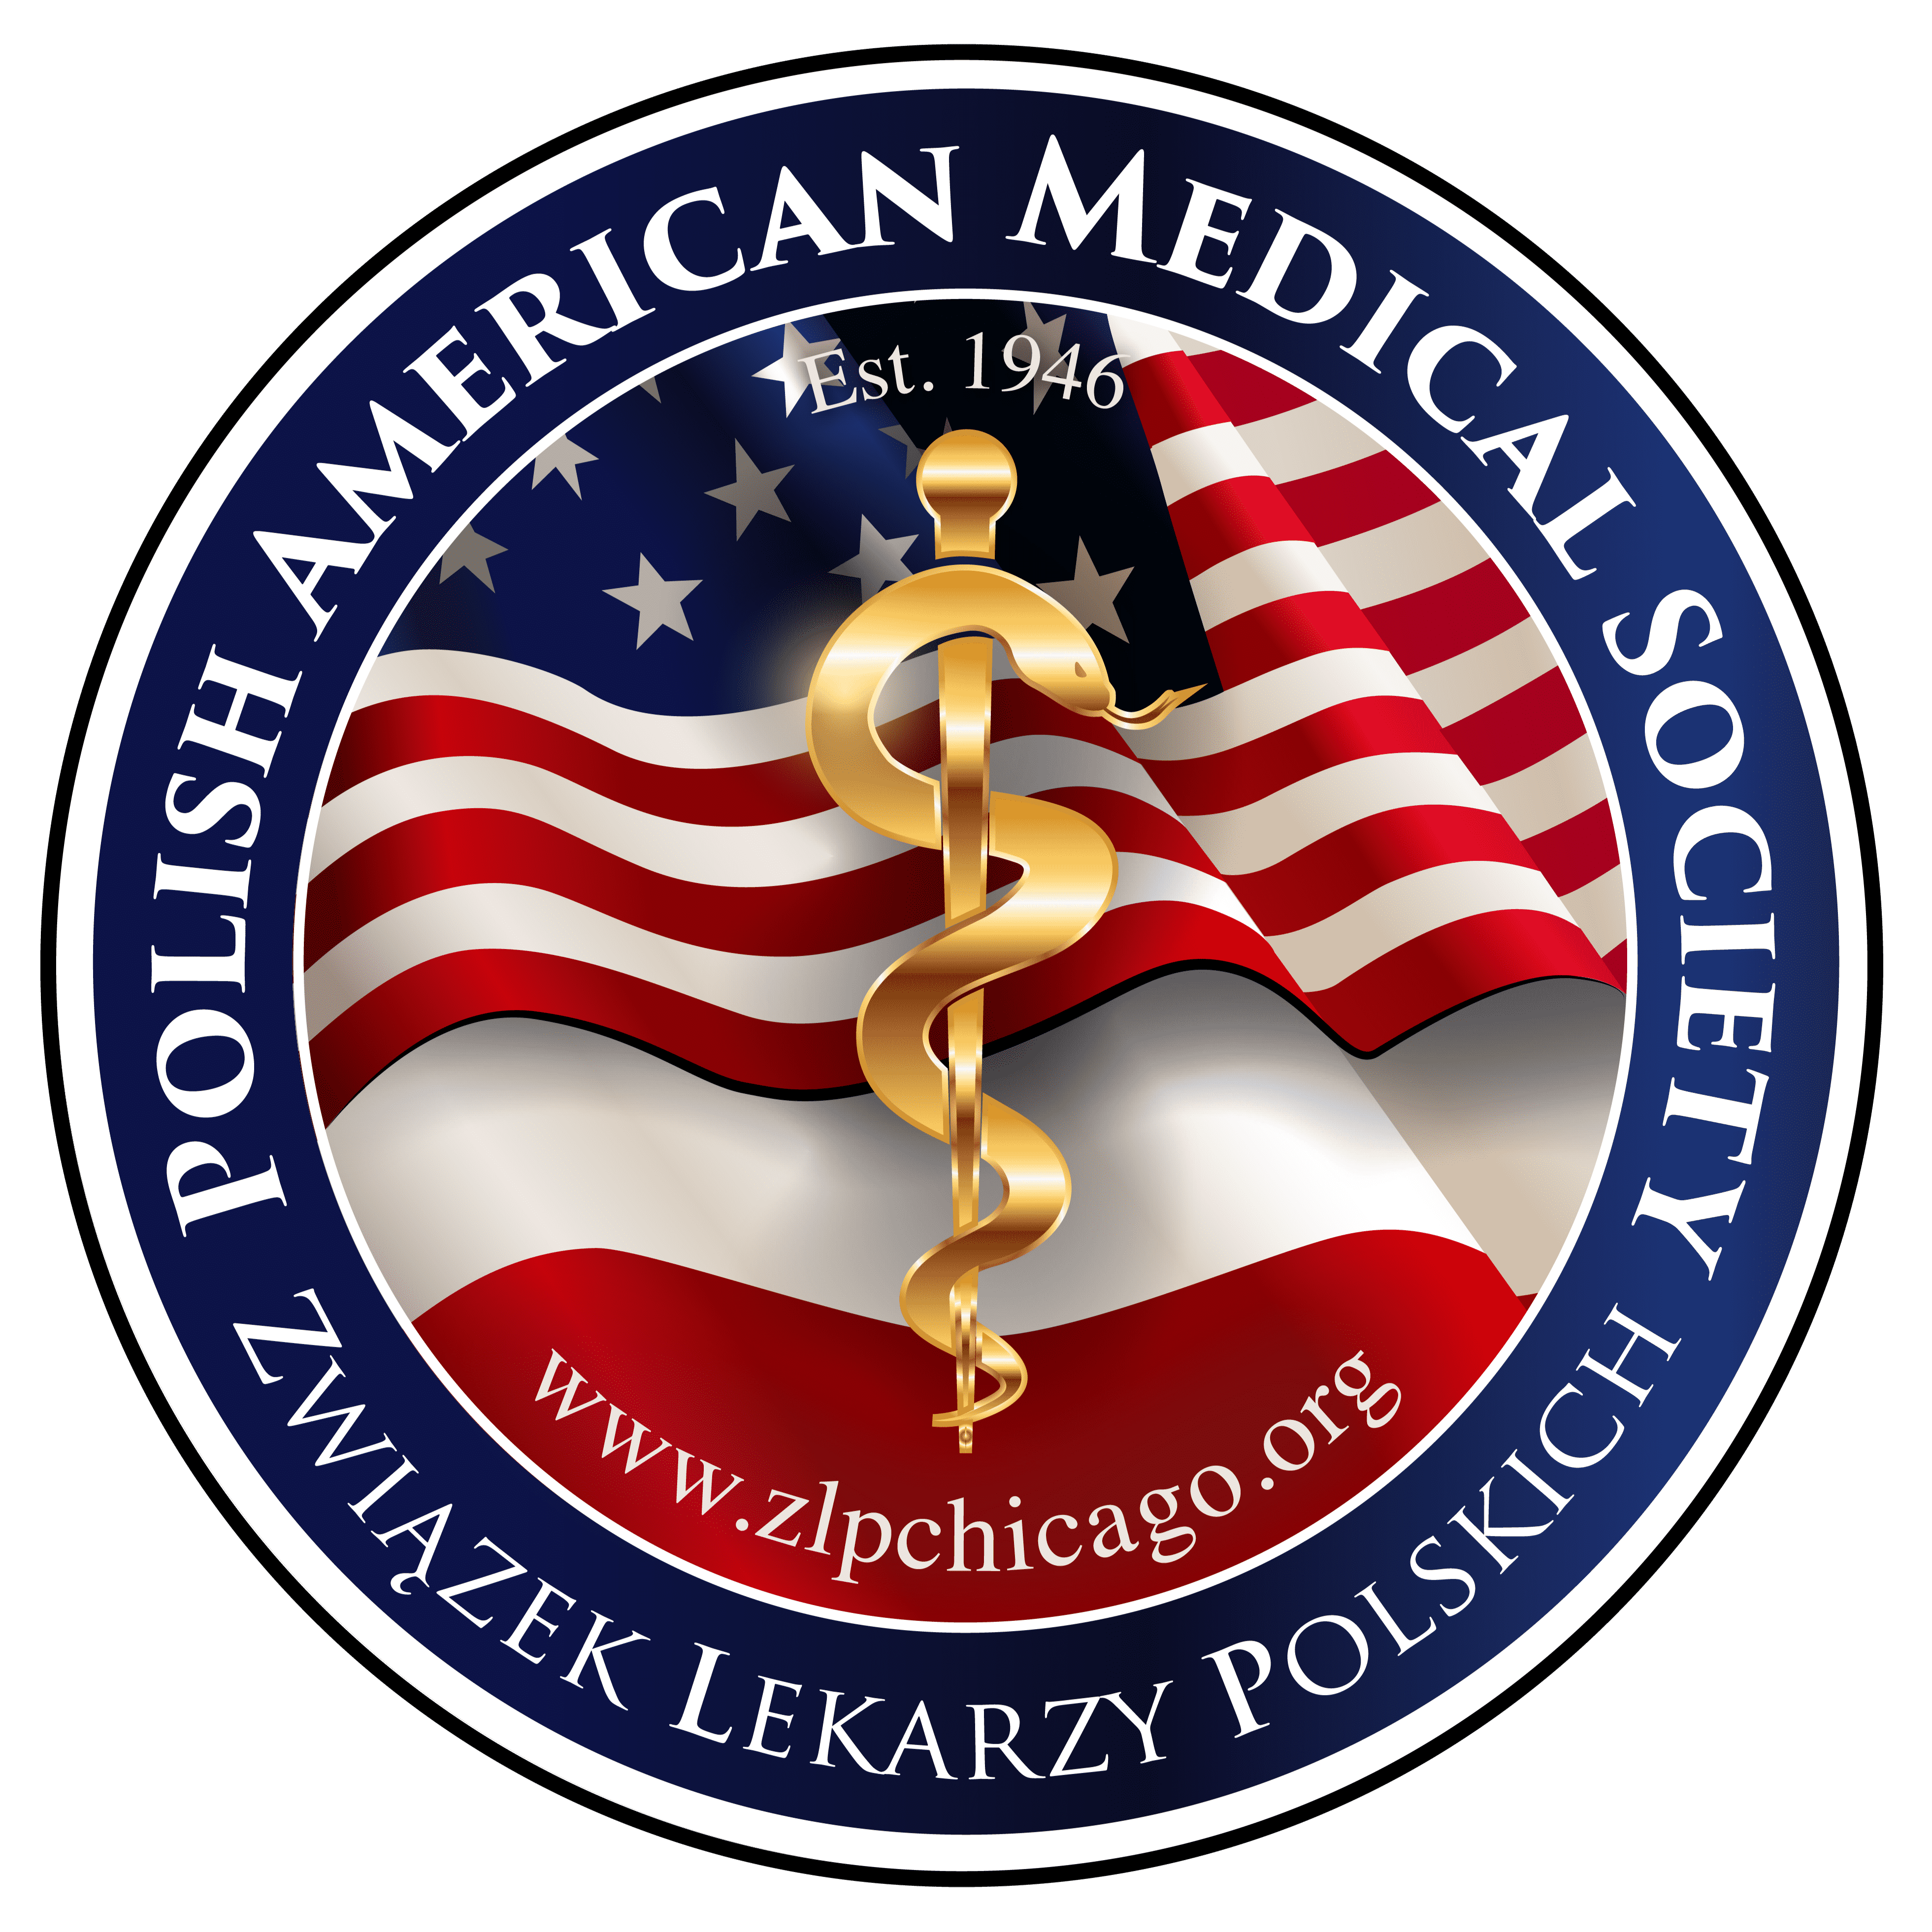 Polish Organization in Illinois - Polish American Medical Society in Chicago